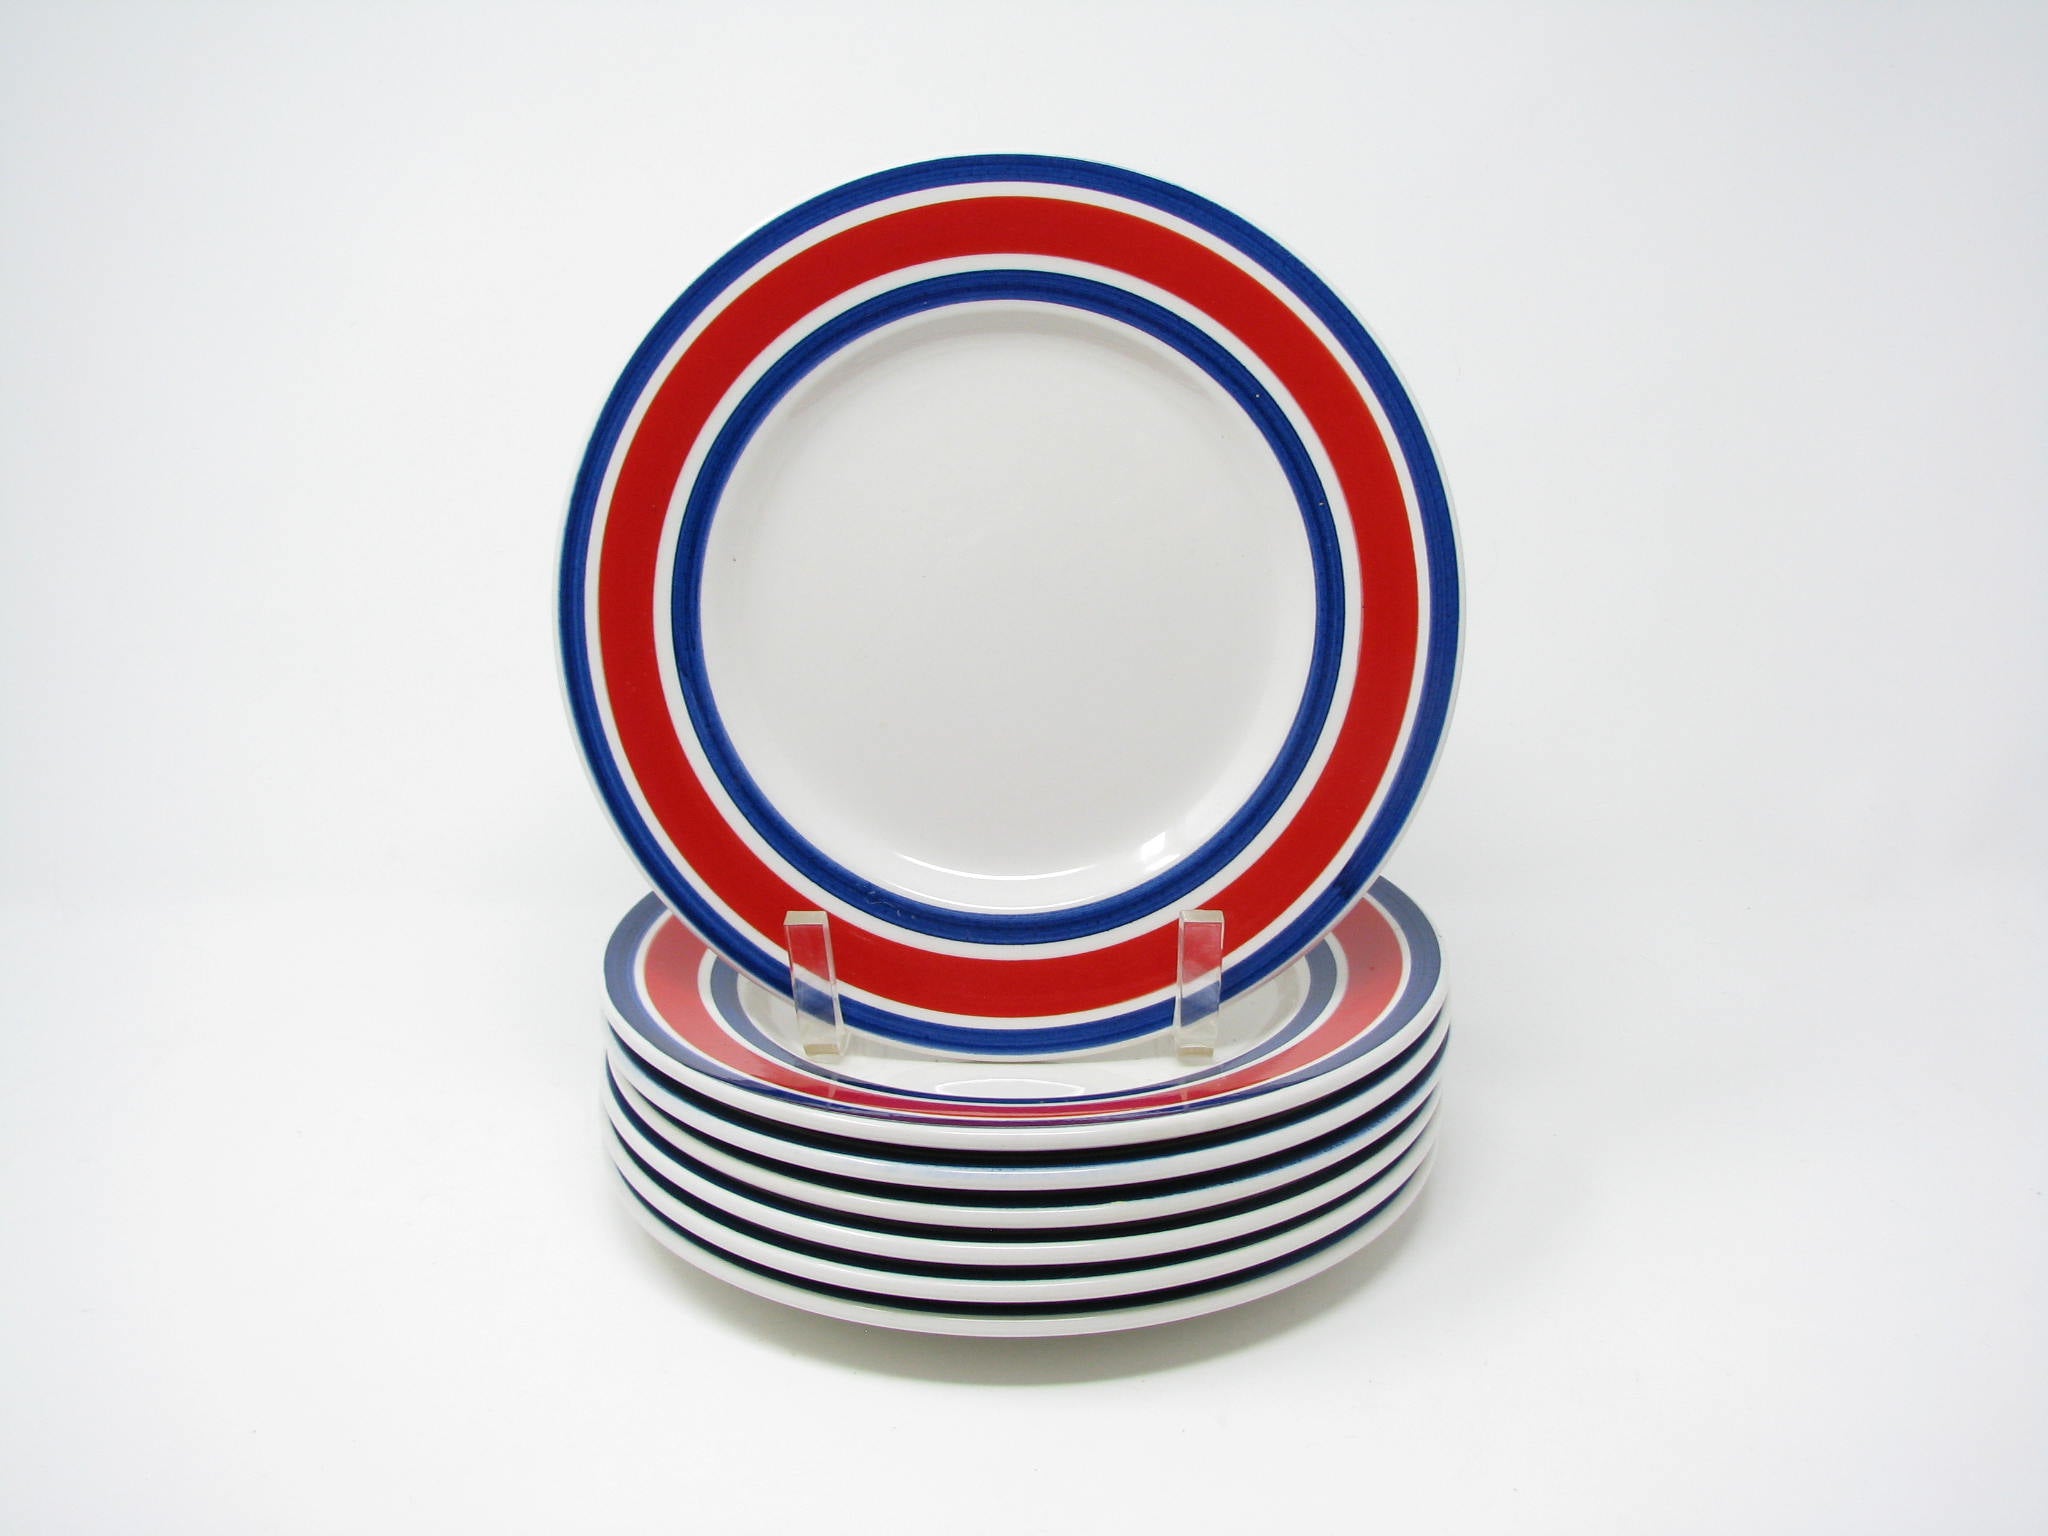 edgebrookhouse - Vintage Mancioli Italian Ceramic Salad Plates with Red & Blue Bands - 7 Pieces